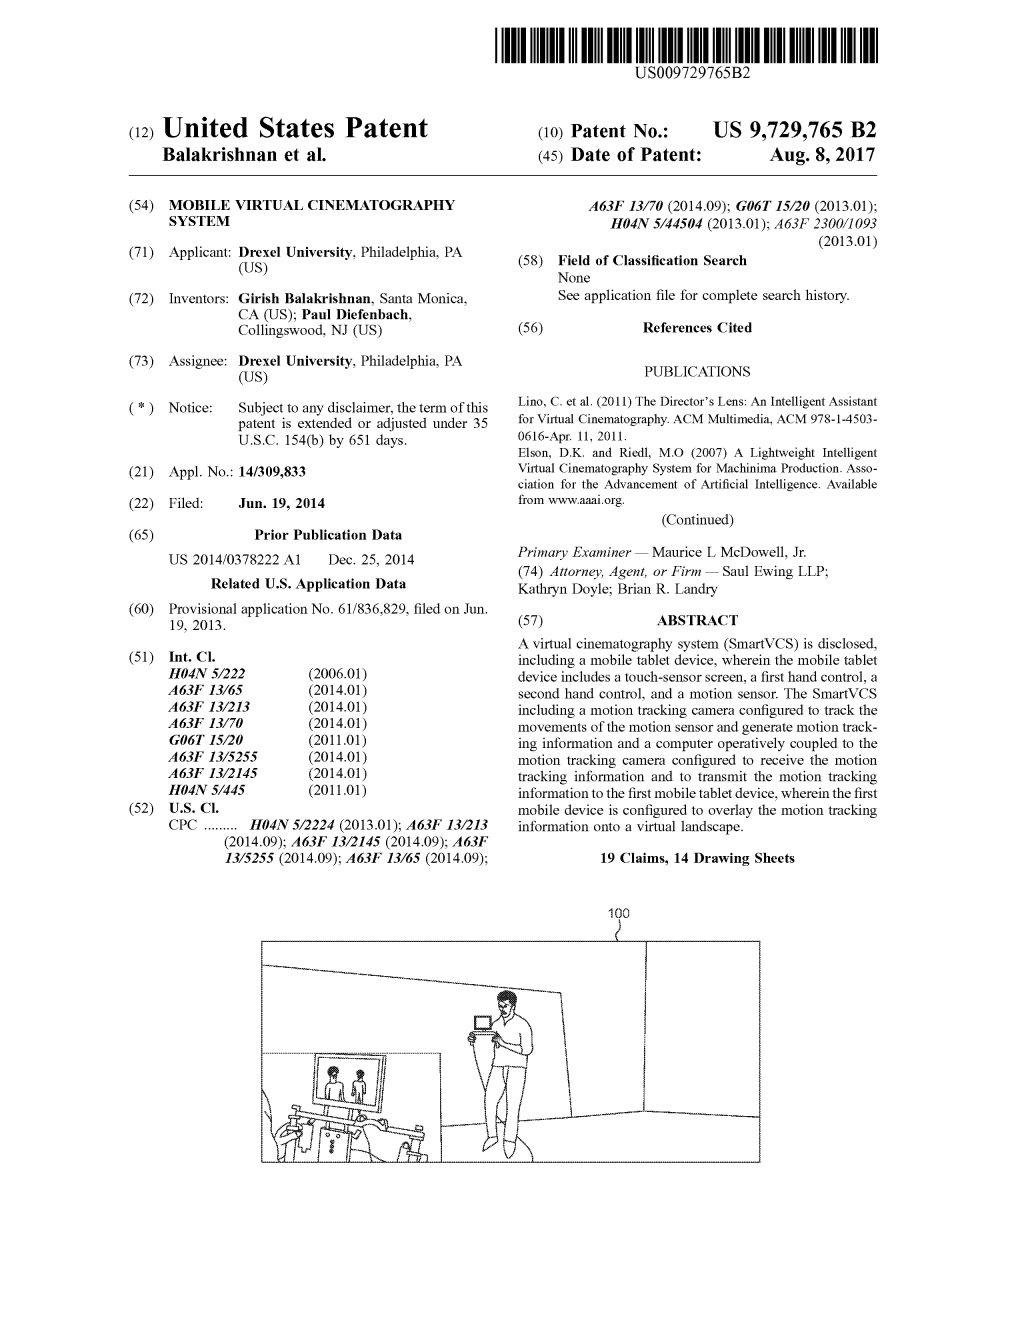 (12) United States Patent (10) Patent No.: US 9,729,765 B2 Balakrishnan Et Al